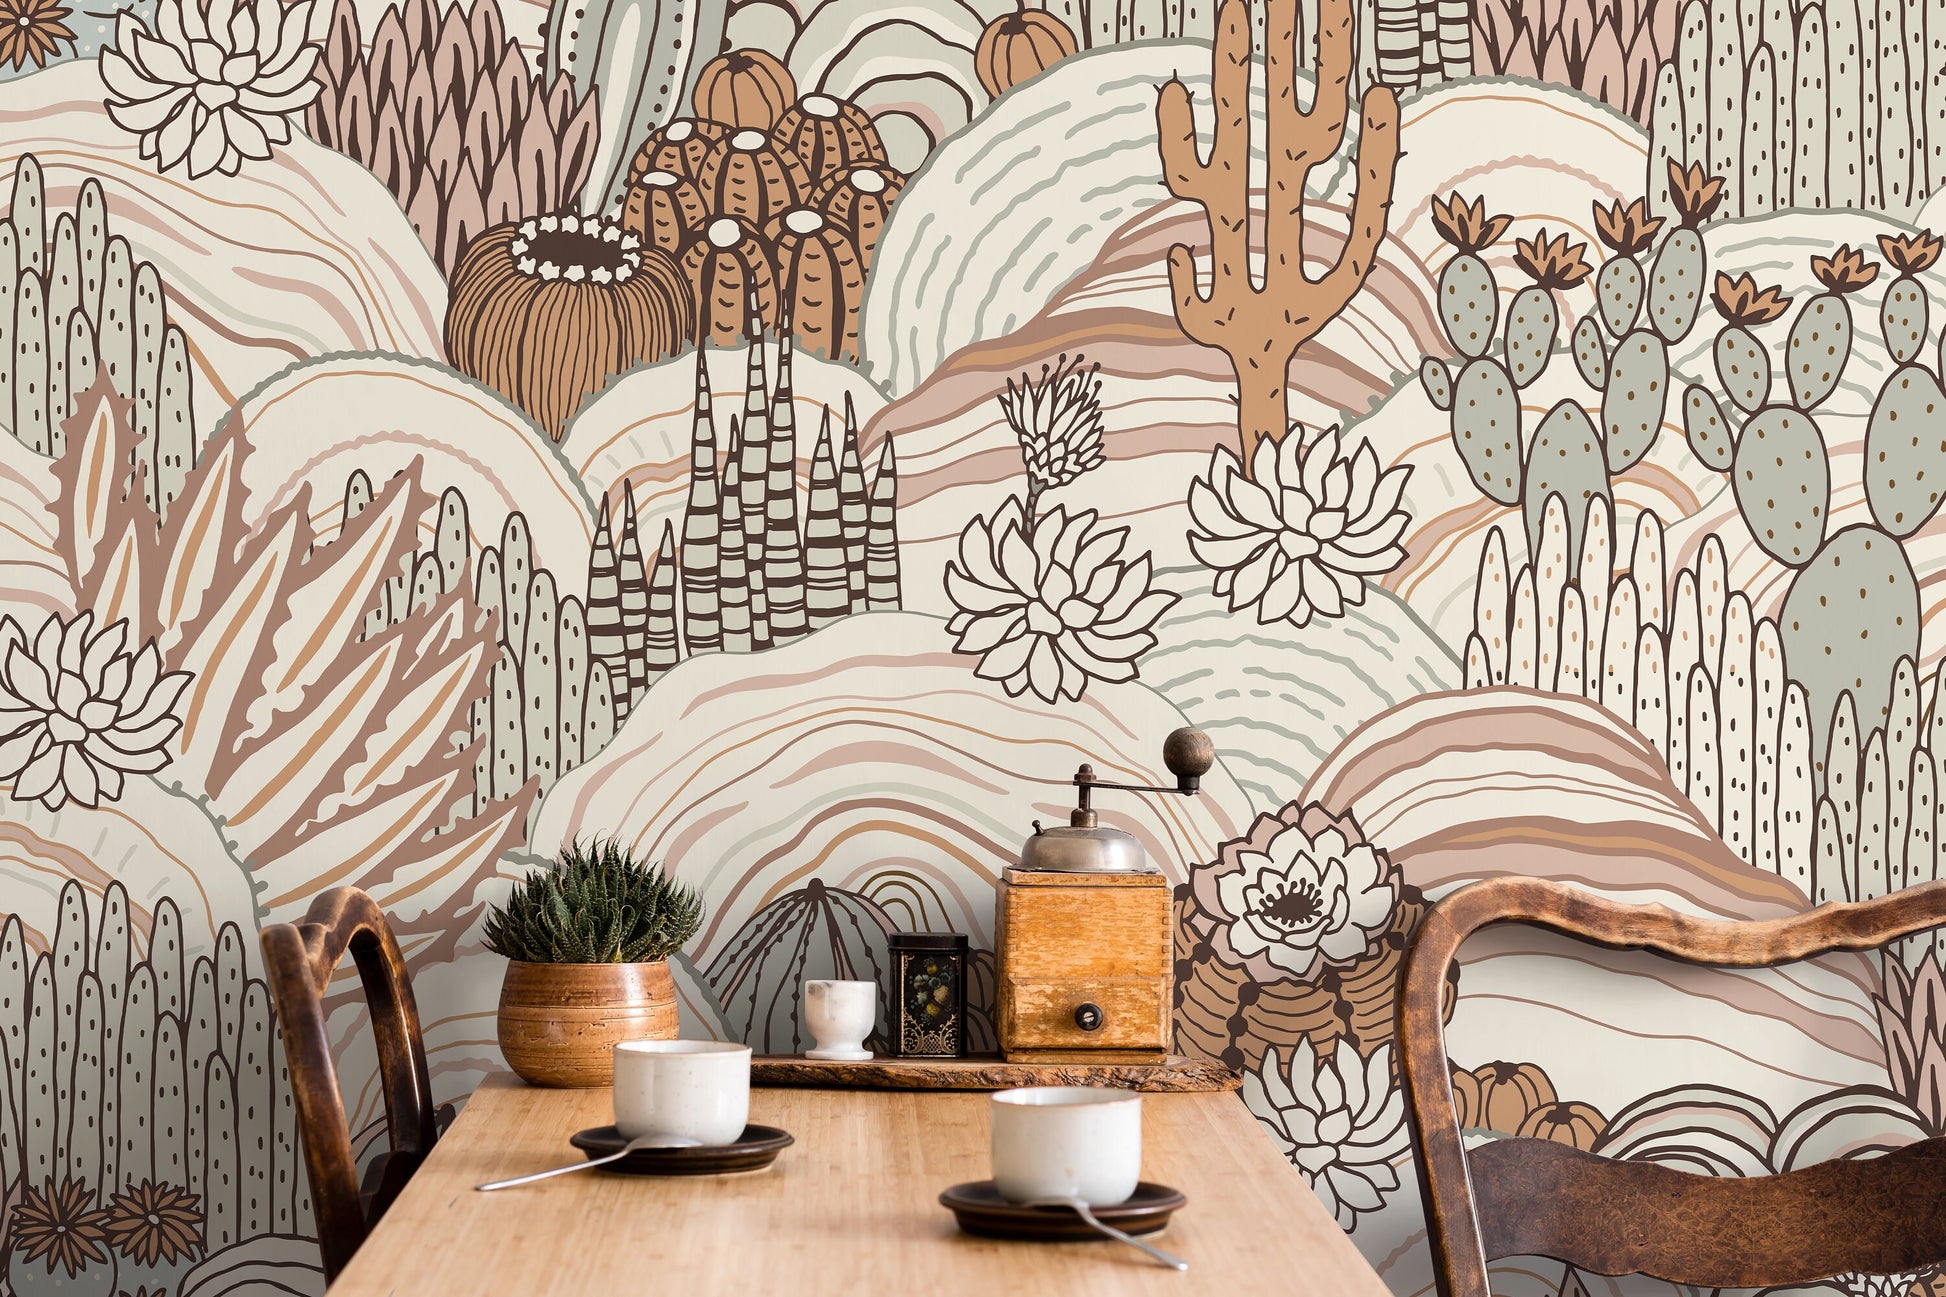 Boho Desert Landscape Wallpaper / Peel and Stick Wallpaper Removable Wallpaper Home Decor Wall Art Wall Decor Room Decor - D278